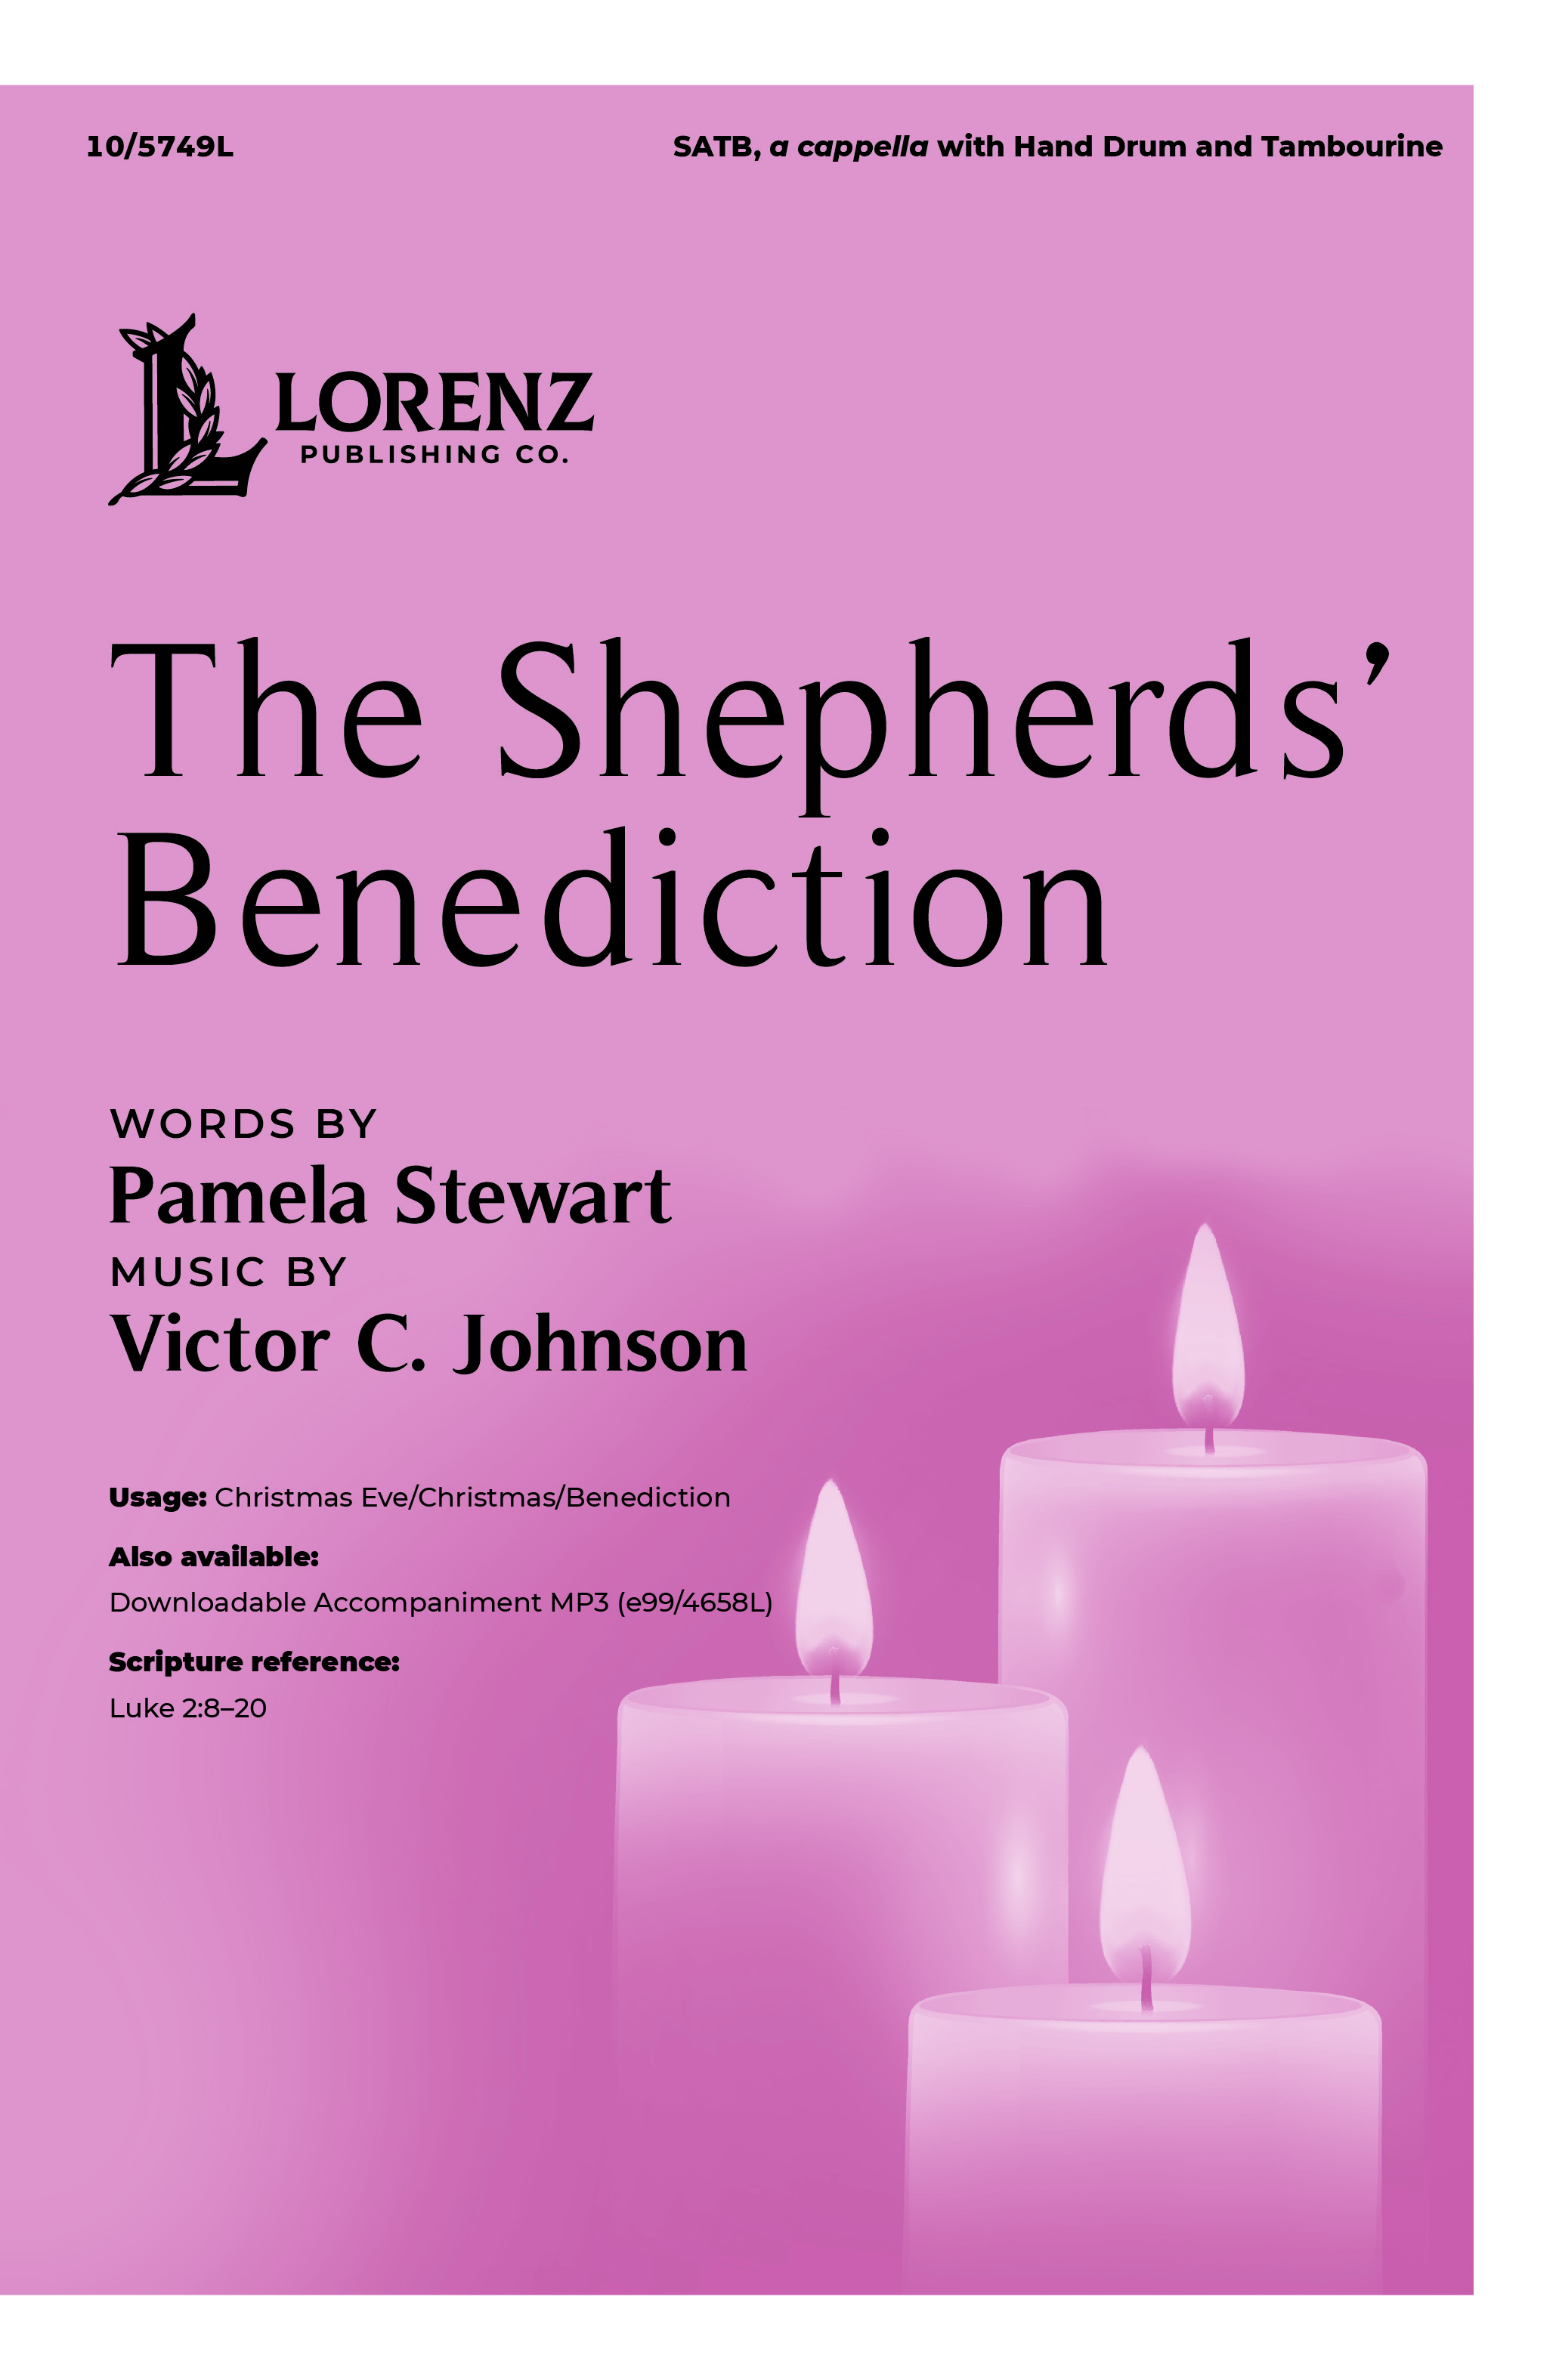 The Shepherd's Benediction